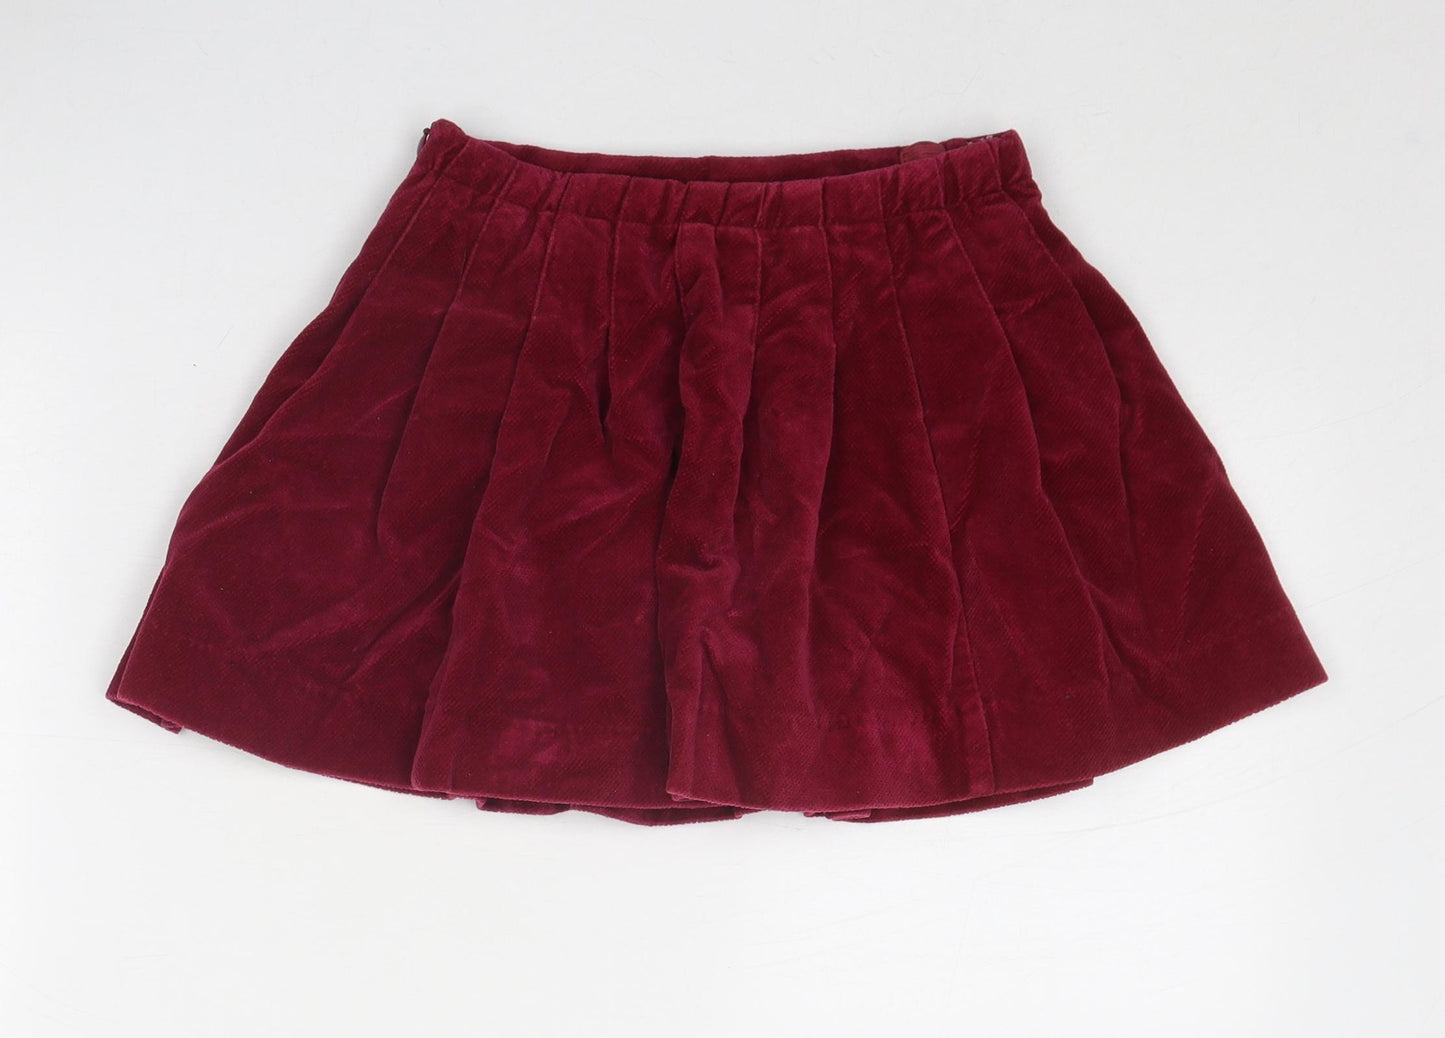 Zara Girls Red Cotton Skater Skirt Size 4-5 Years Regular Zip